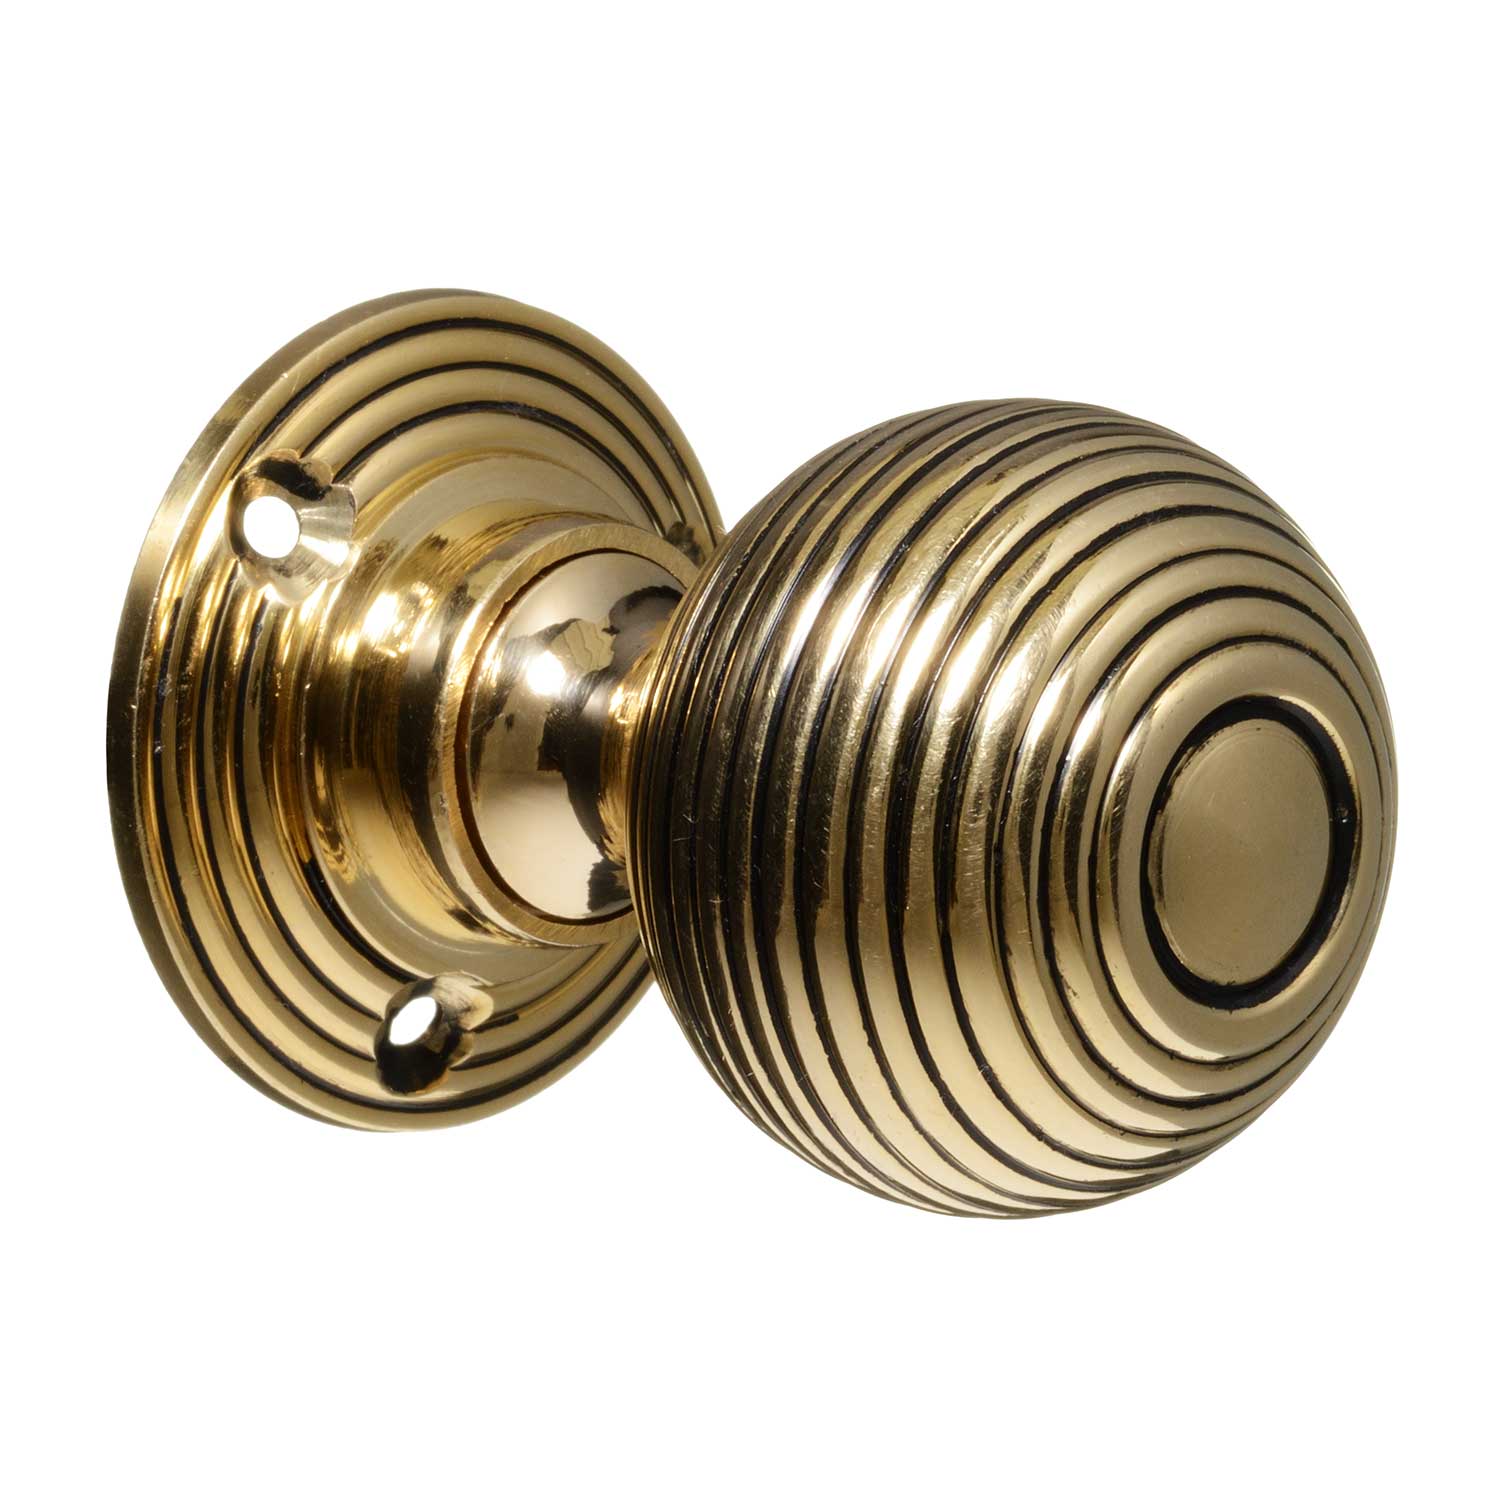 Key Hole Lock Covers Project 12-12 Vintage Decorative Brass Door Escutcheon 